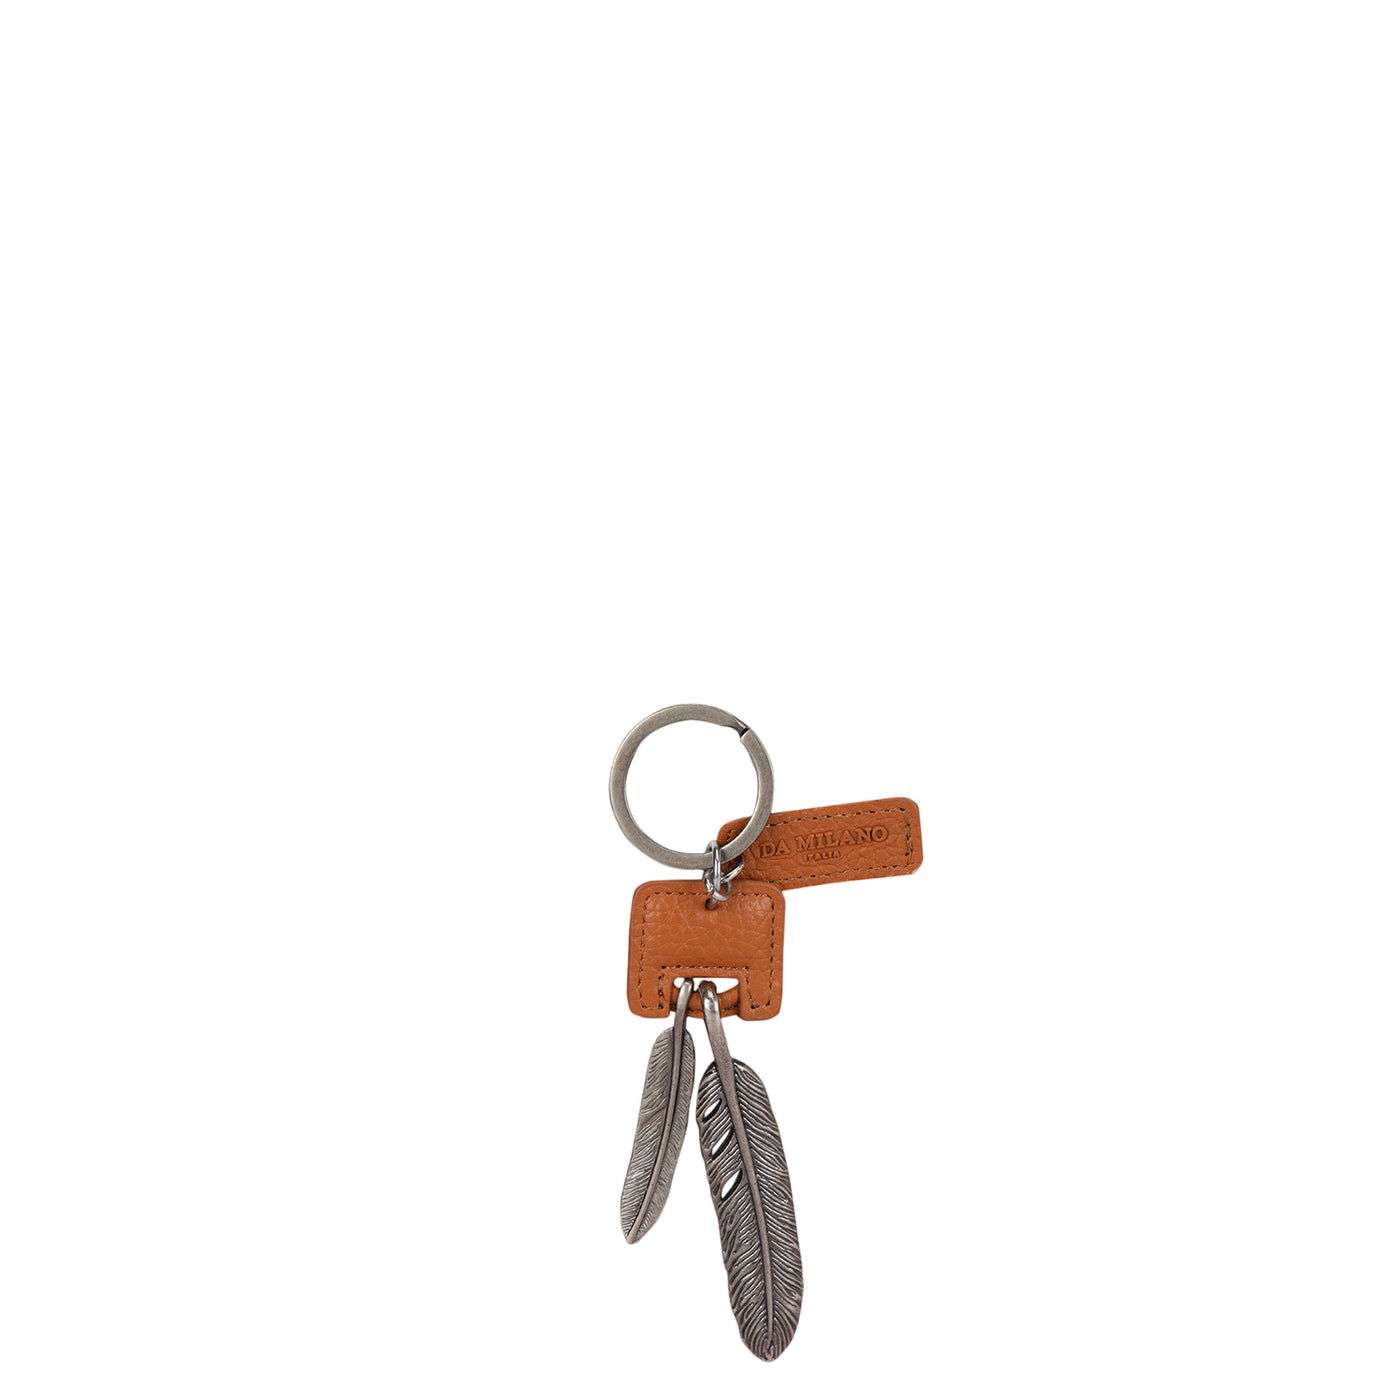 Wax Leather Key Chain - Caramel